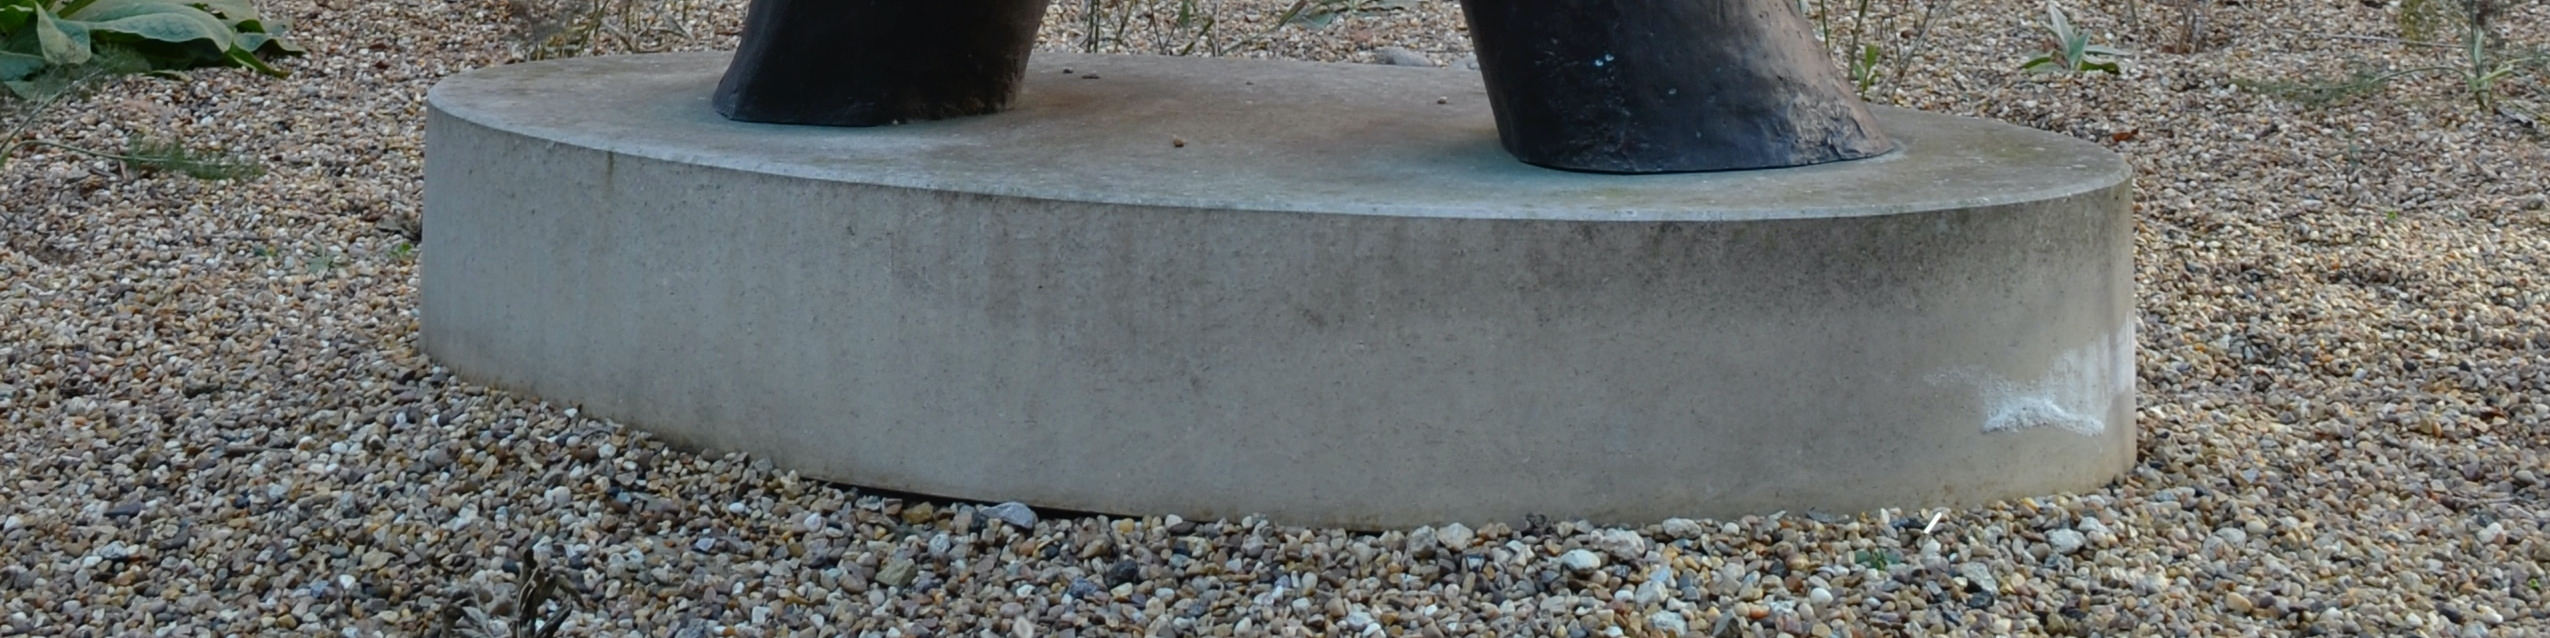 concrete securing outdoor sculptures